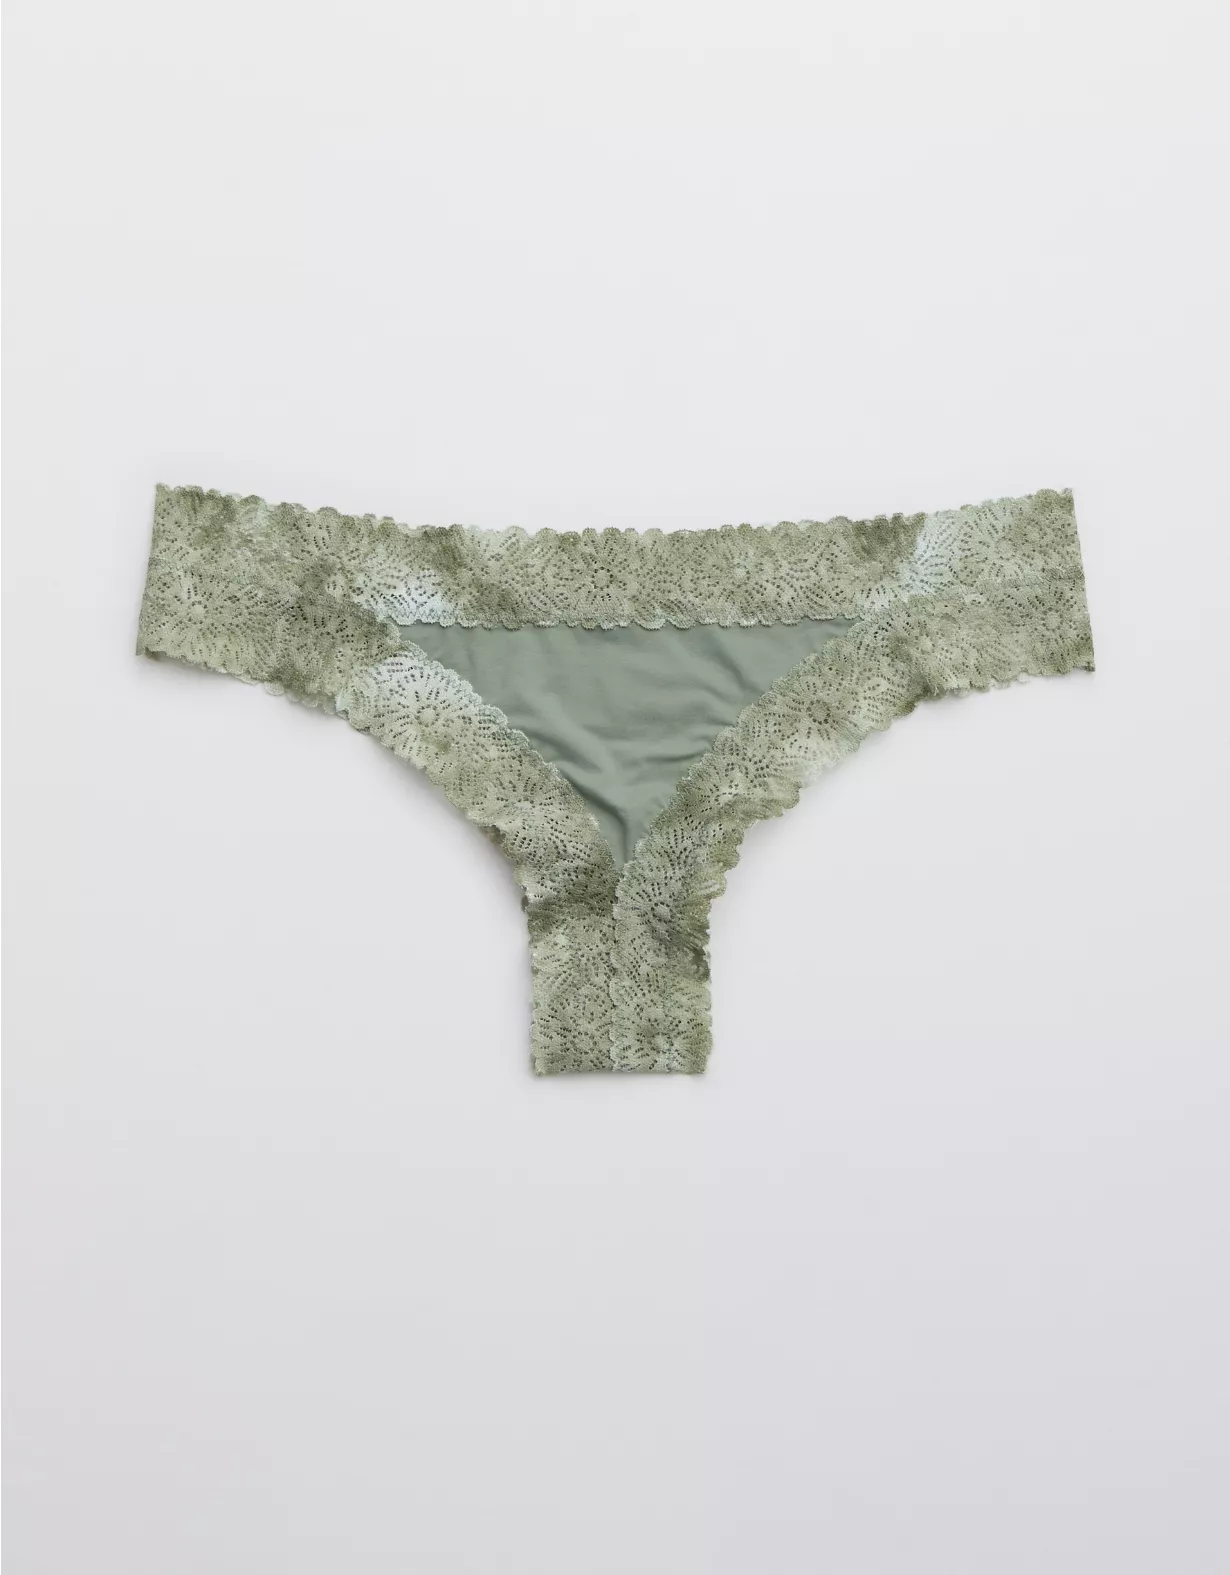 Aerie Sunnie Blossom Lace Thong Underwear